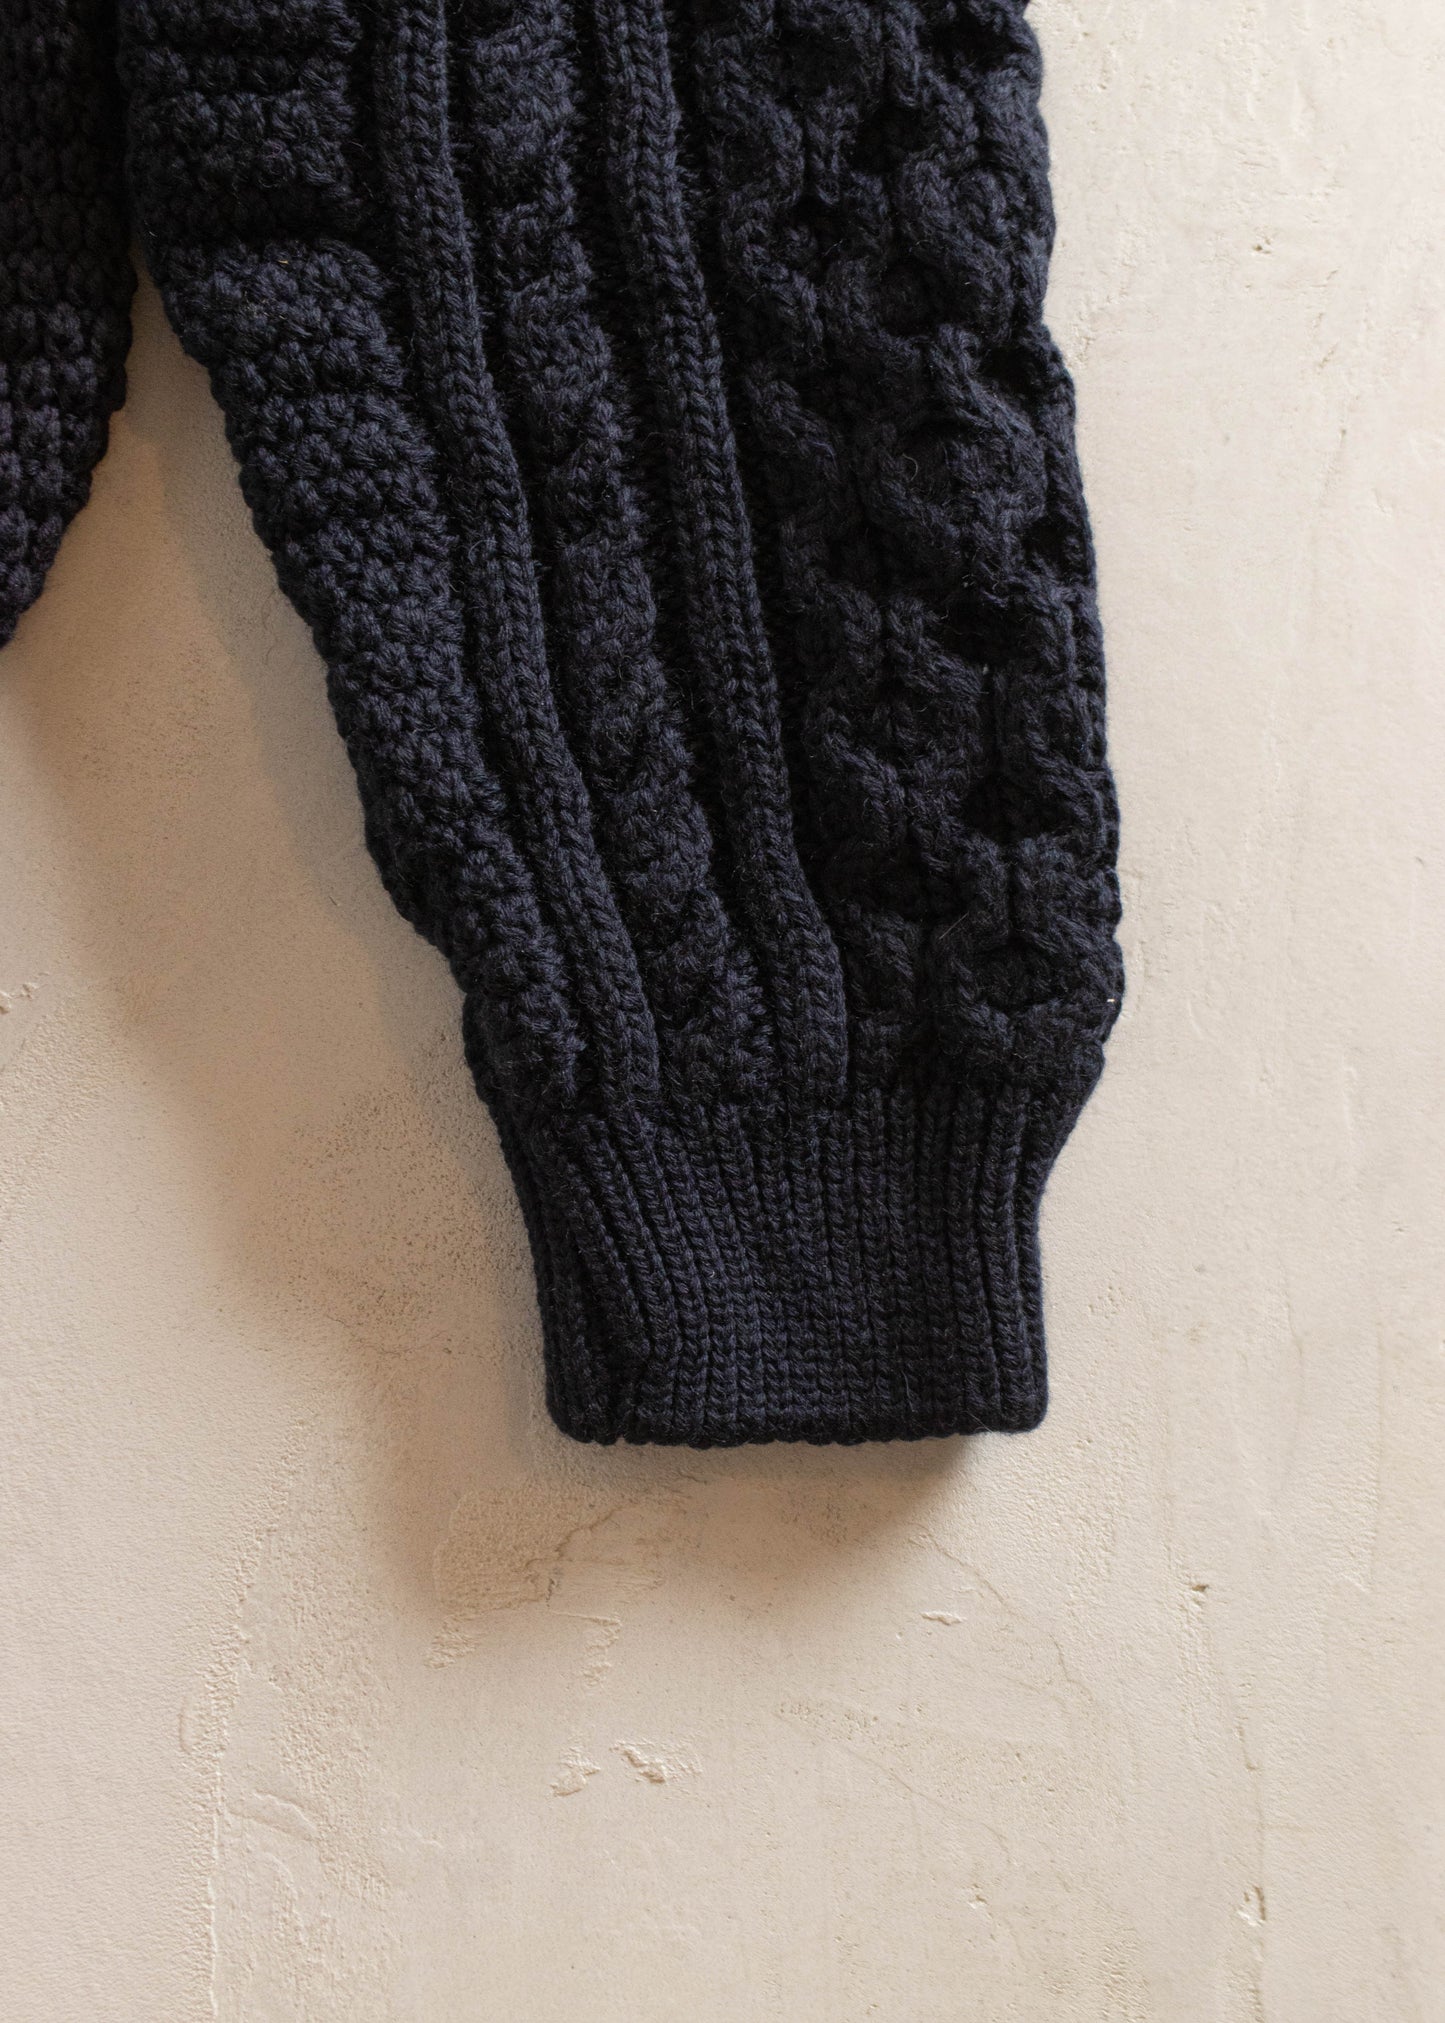 1980s Wool Fisherman Pullover Sweater Size L/XL